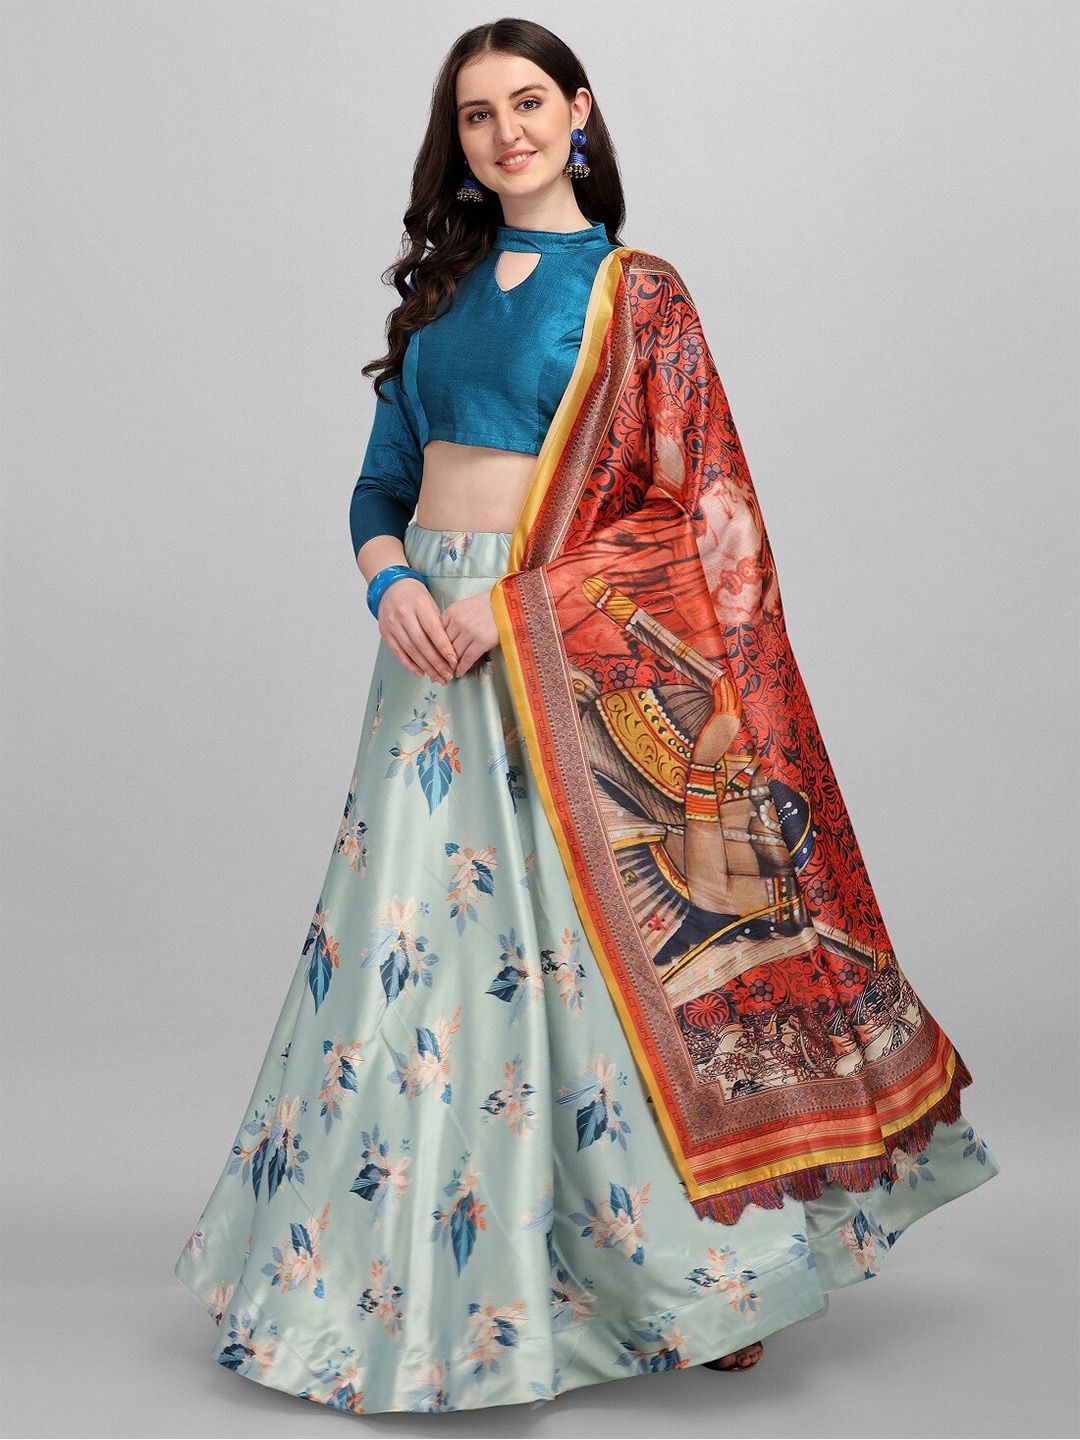 Fashionuma Blue & Red Semi-Stitched Lehenga & Unstitched Blouse With Dupatta Price in India